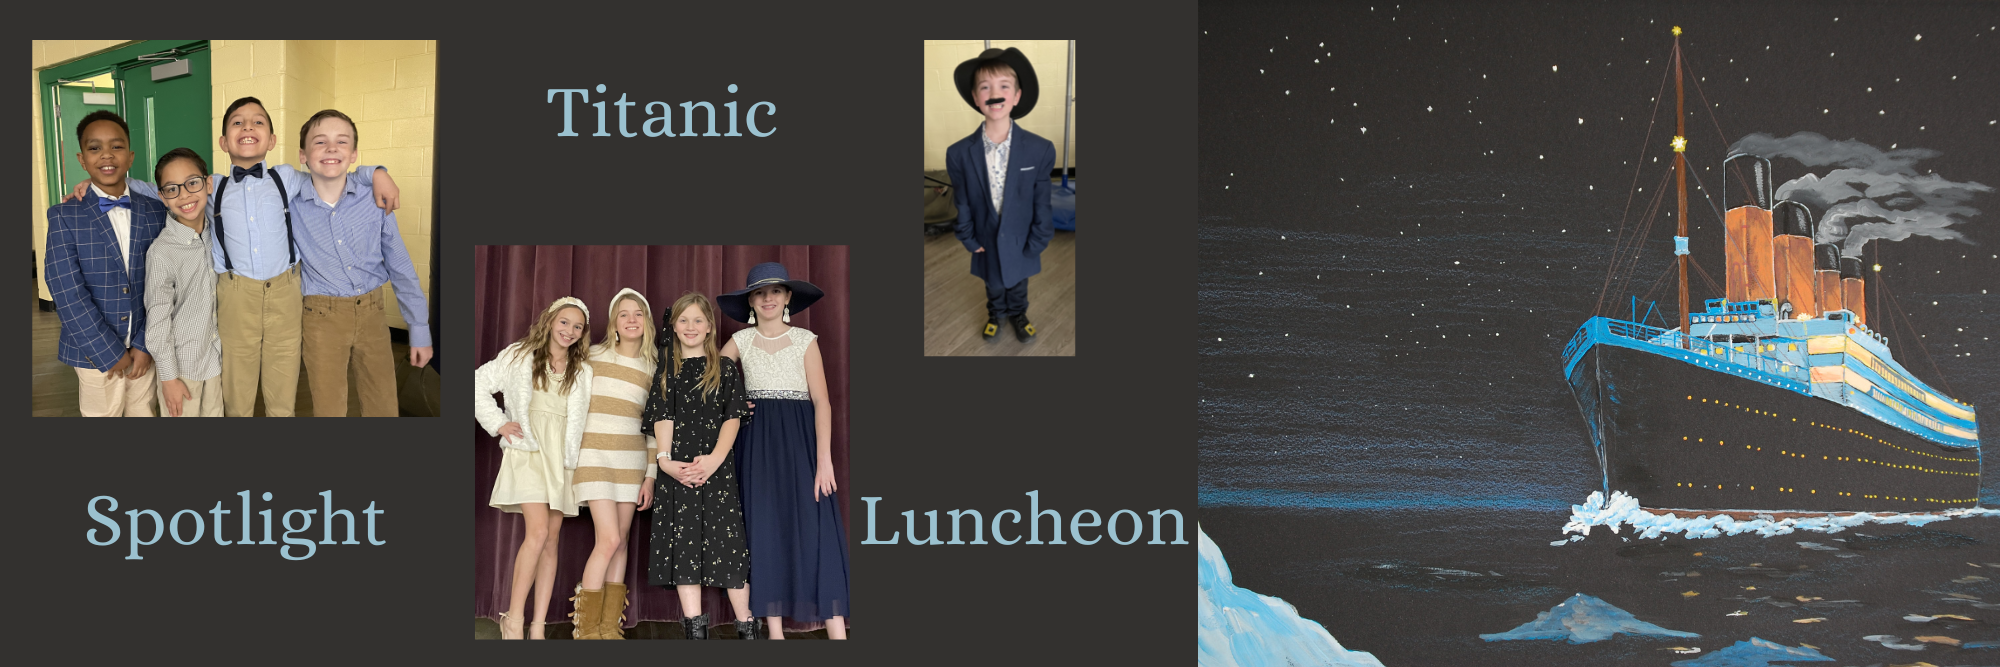 Spotlight Titanic Luncheon